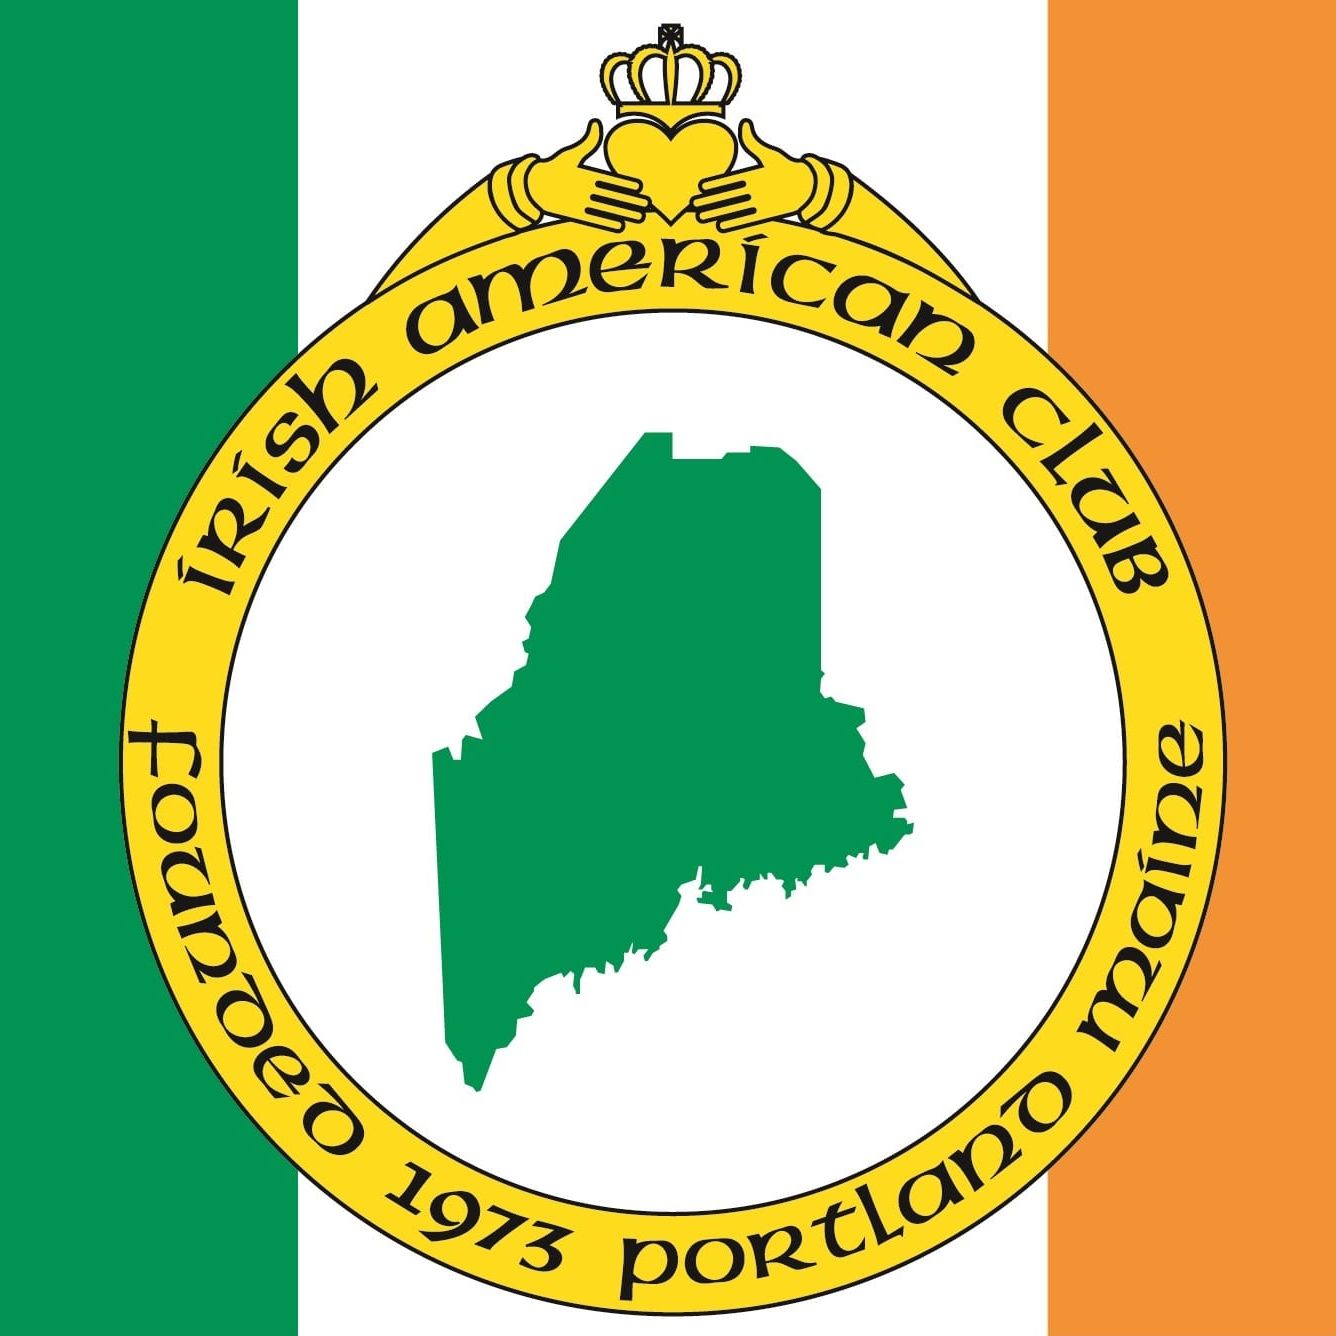 Irish Organization Near Me - Irish American Club Portland, Maine